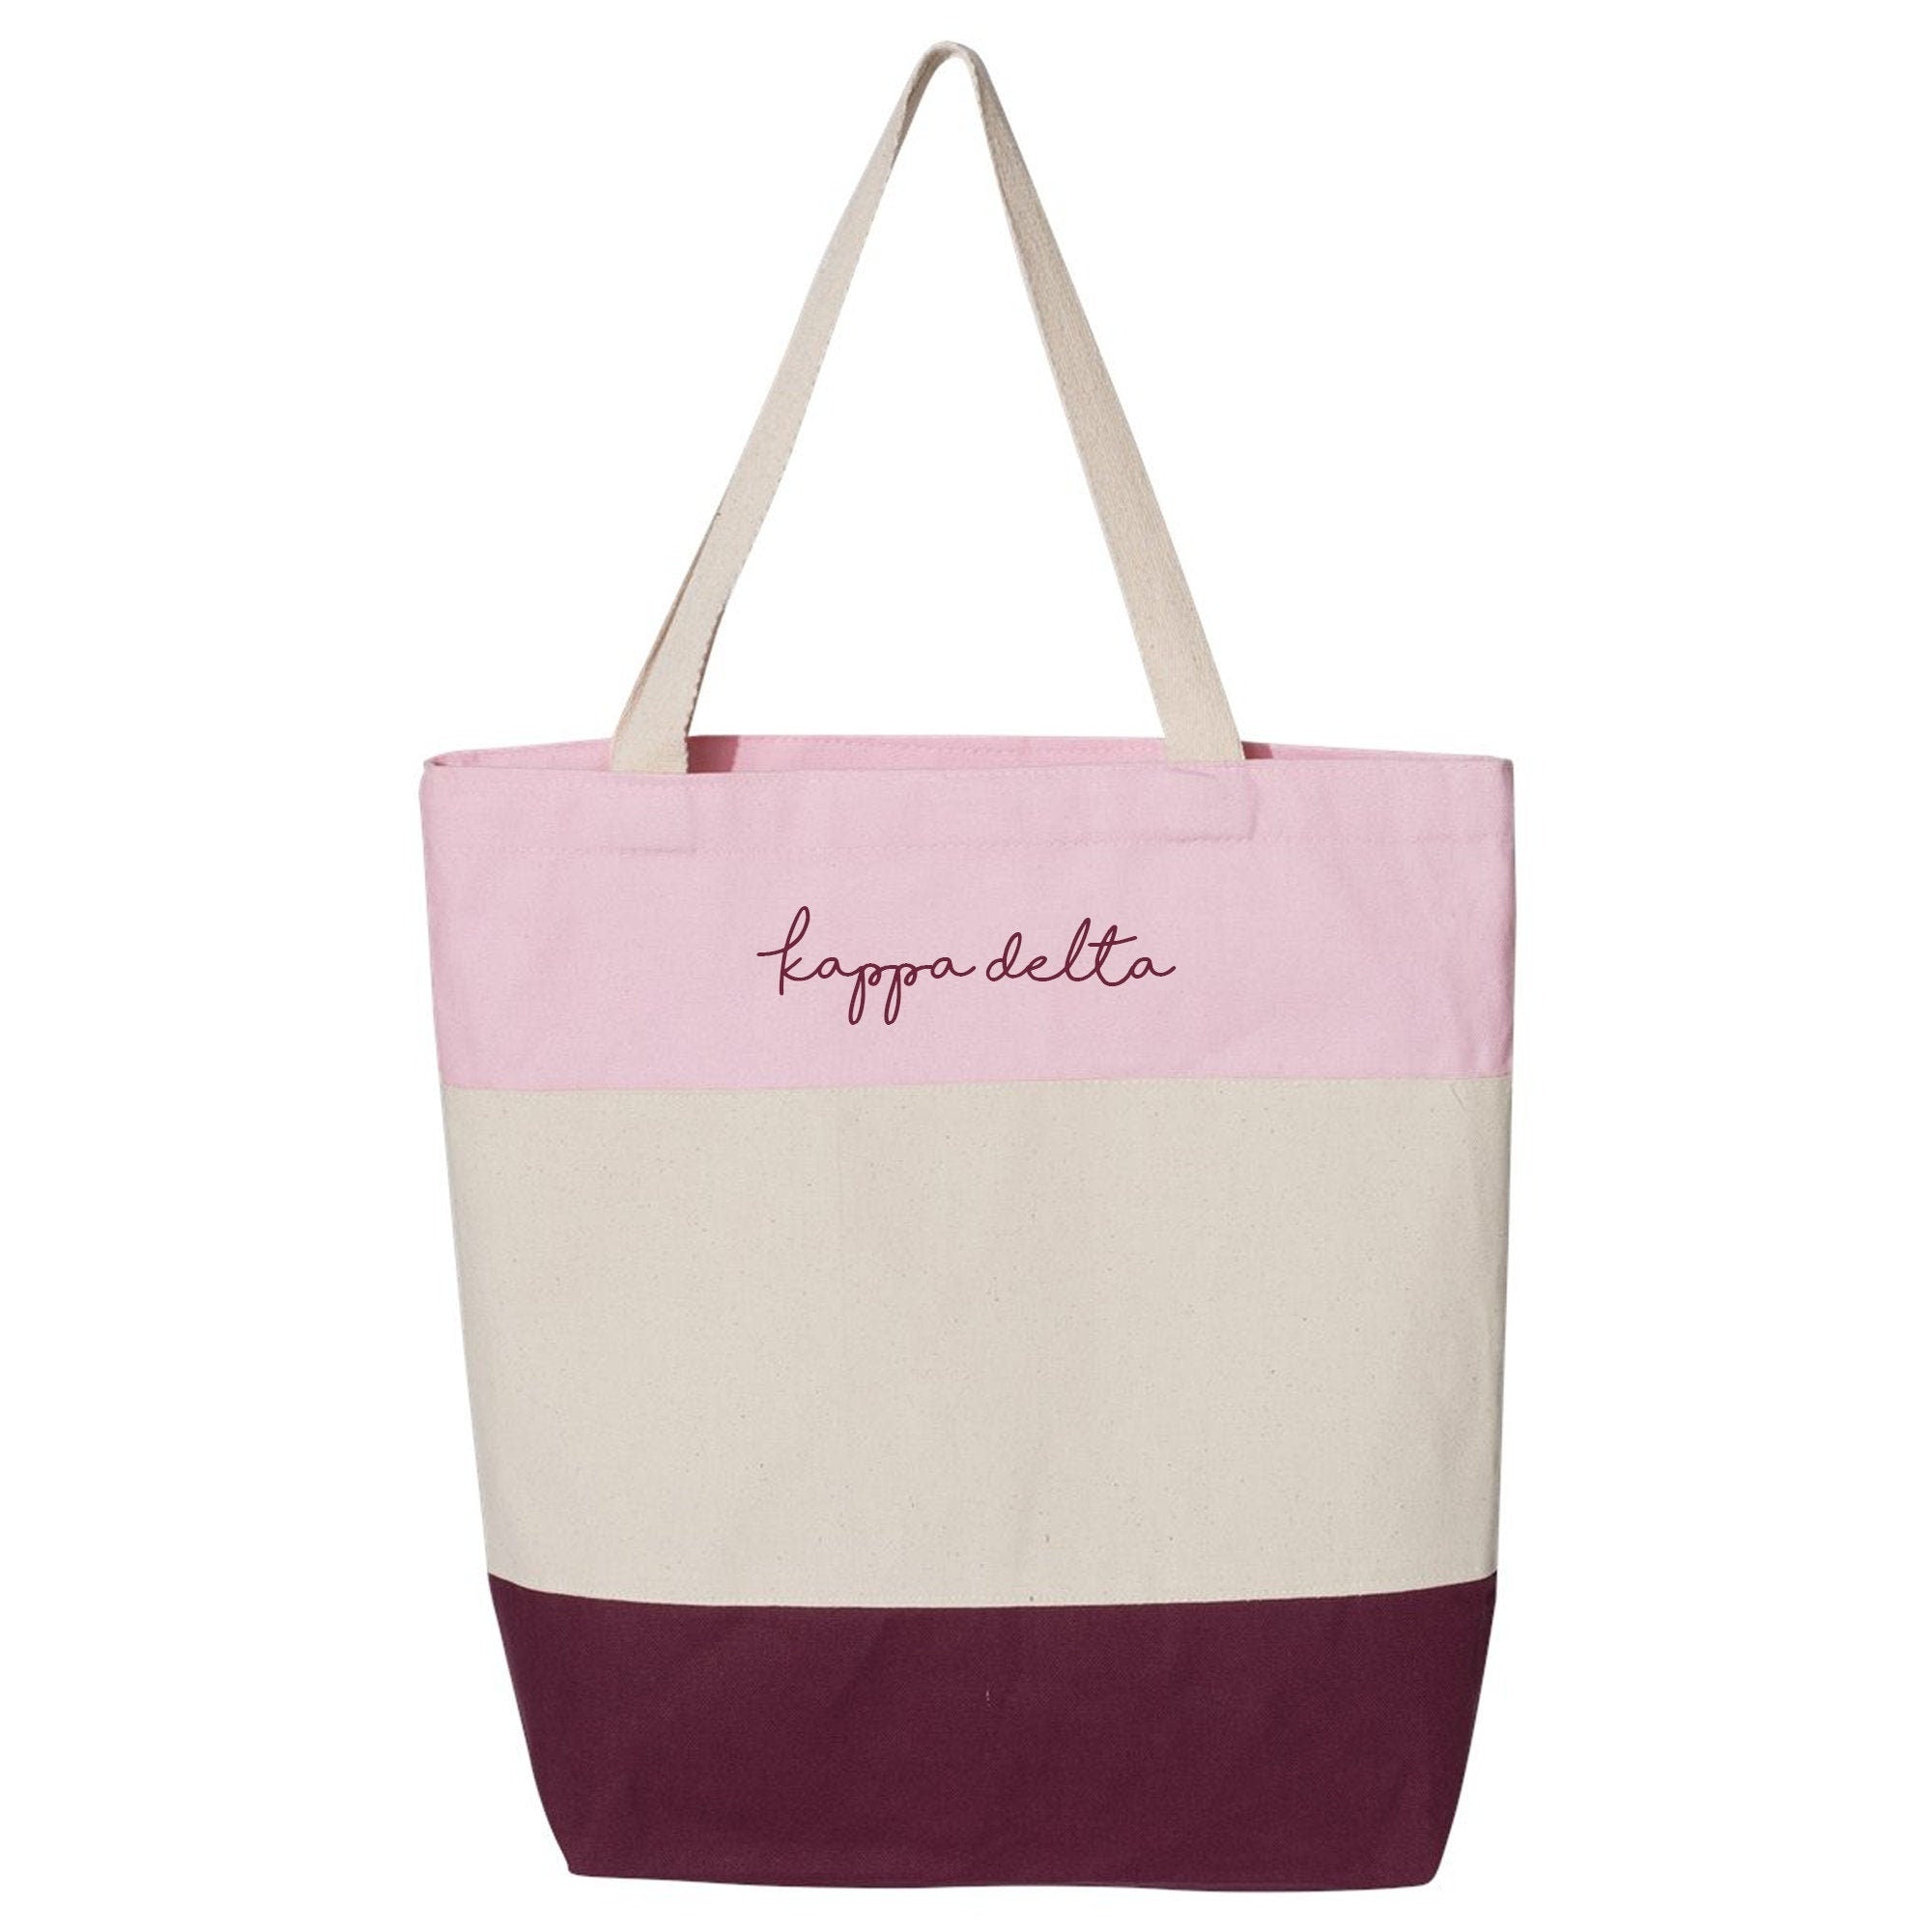 Kappa Delta - Tote Bag, Sorority Gift, Bid Day Gift, Big & Little Reveal - Go Greek Chic